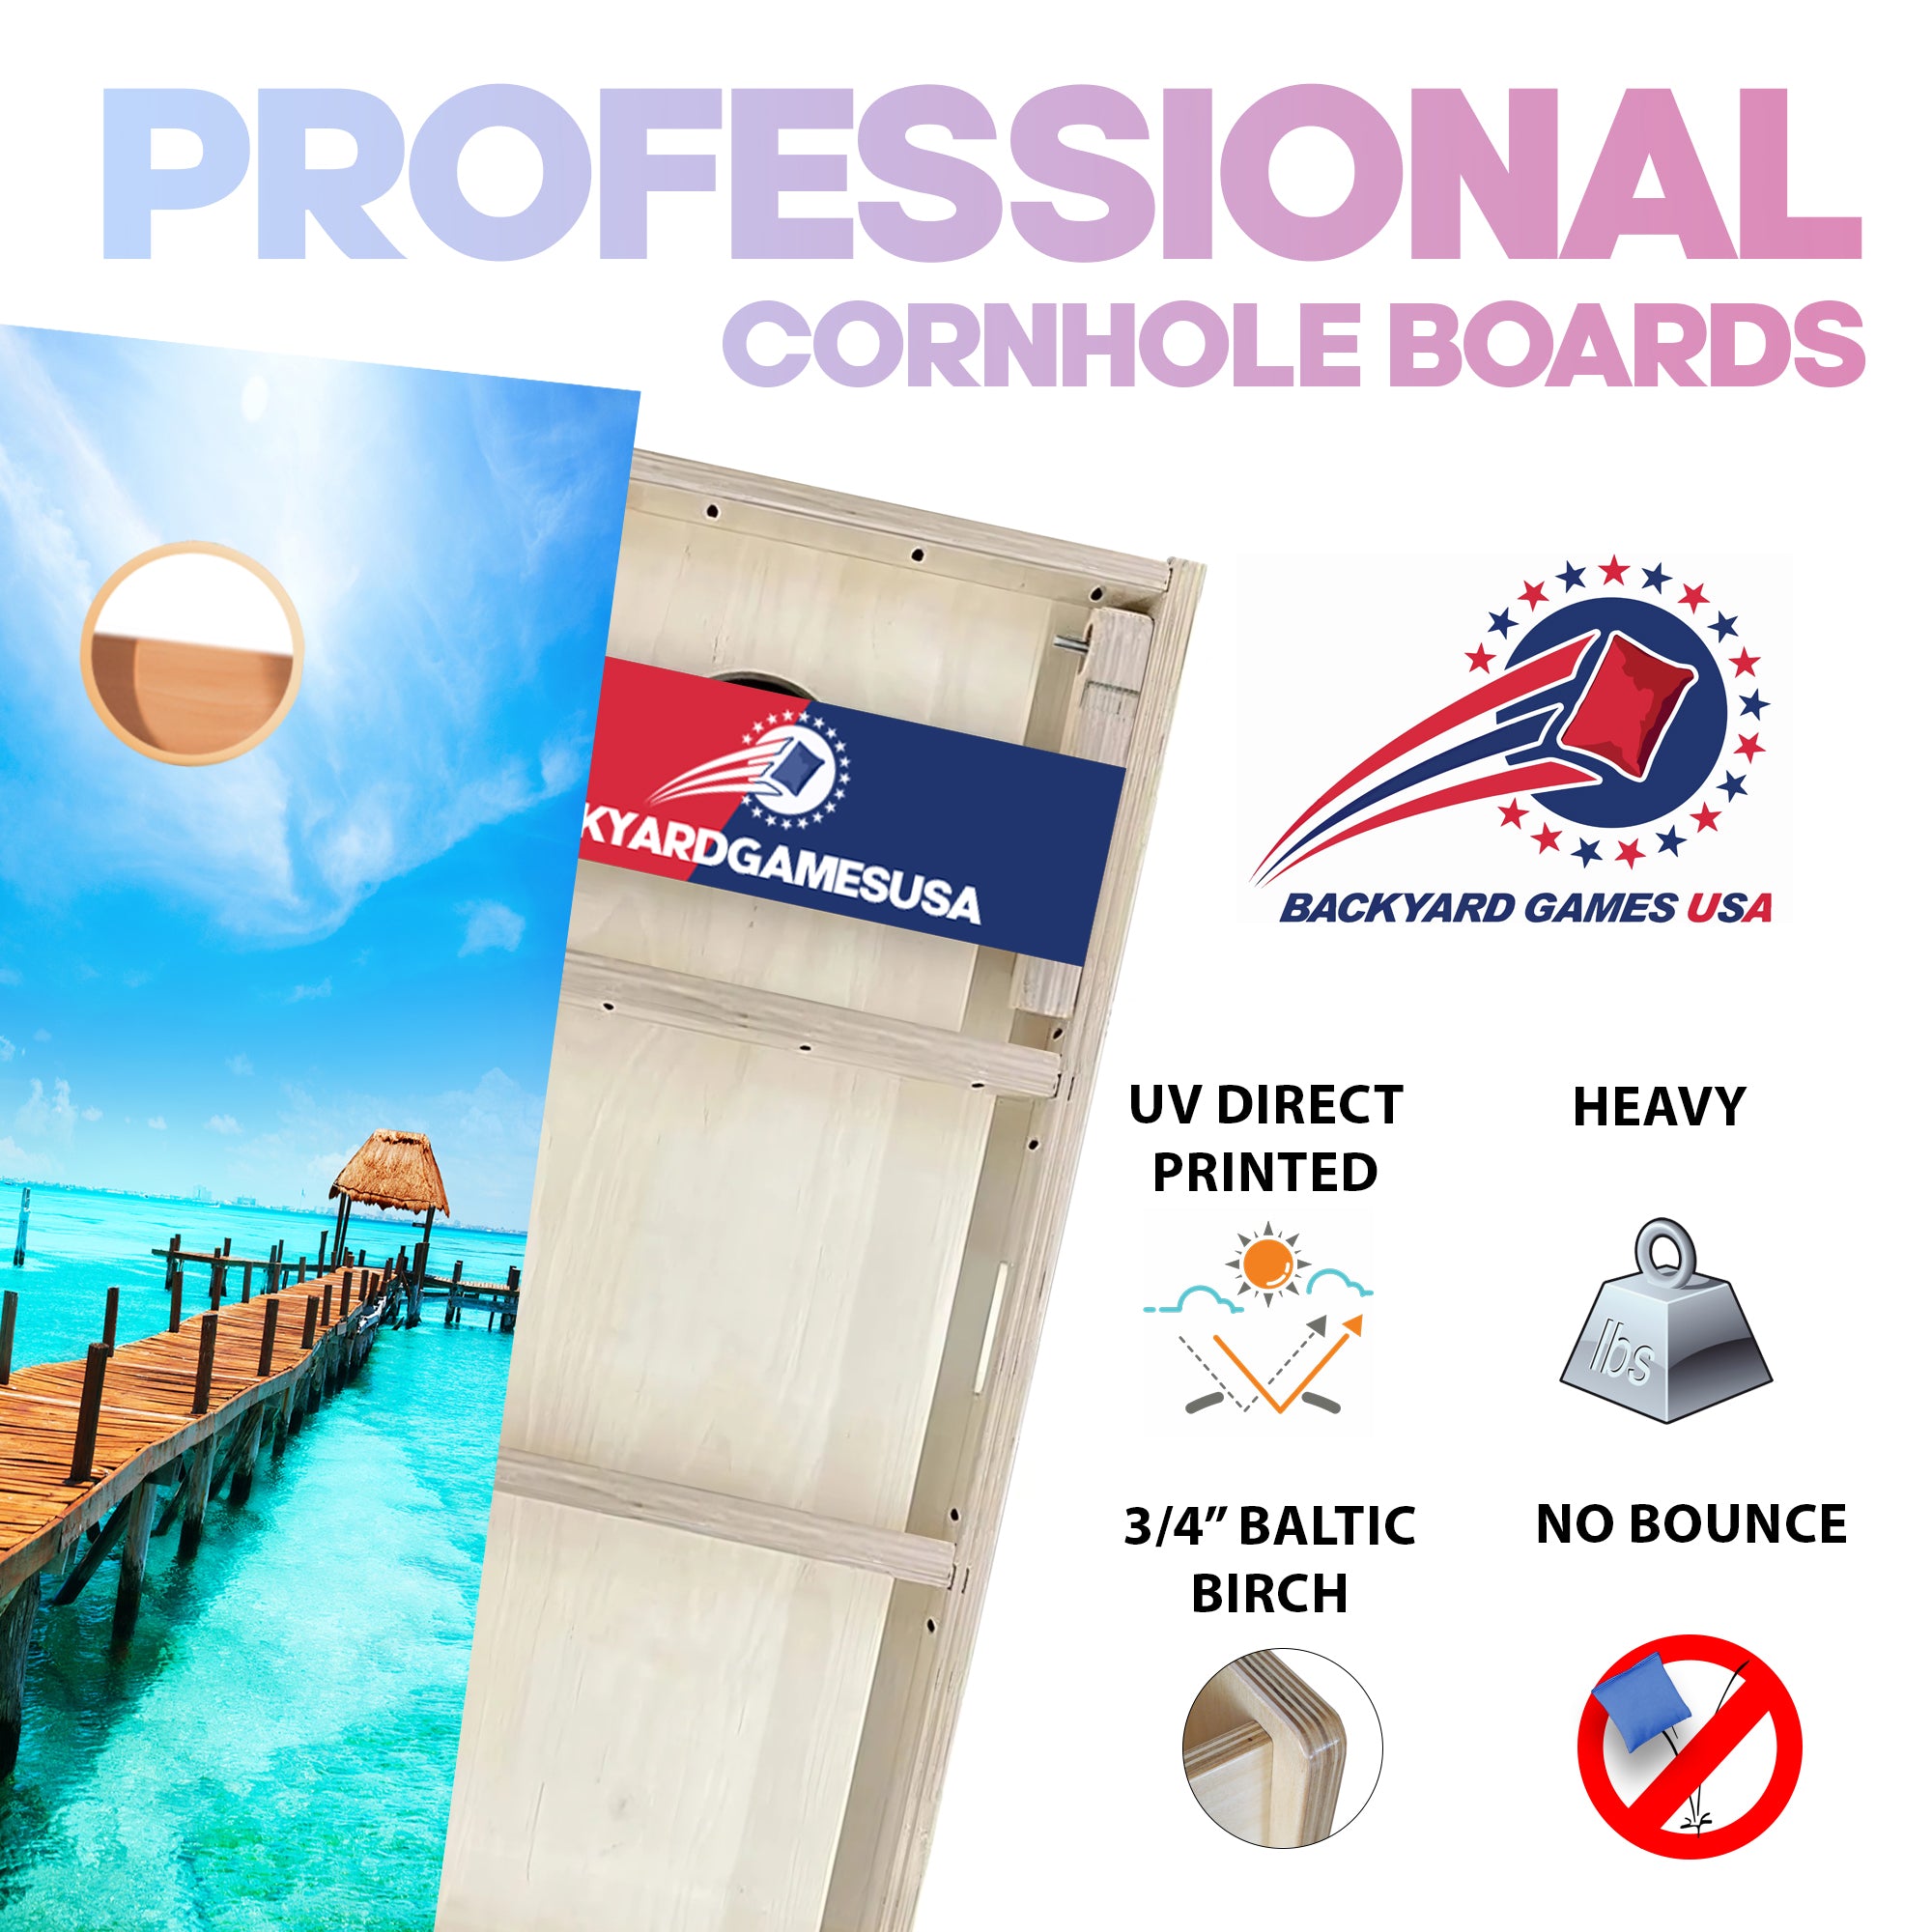 Dock Pier Professional Cornhole Boards